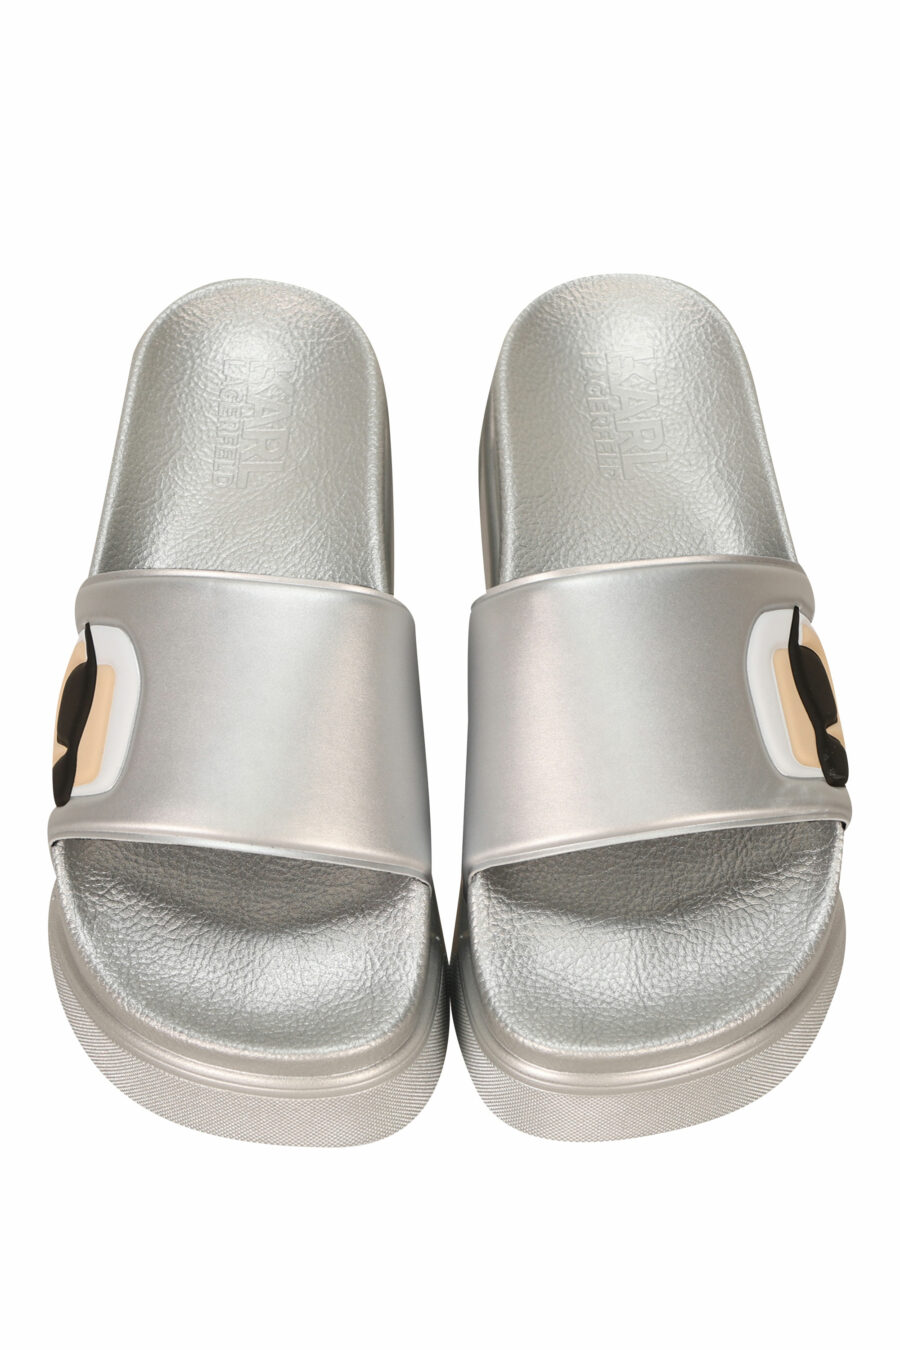 Sandales à plateforme argentées avec logo "karl" - 5059529404849 4